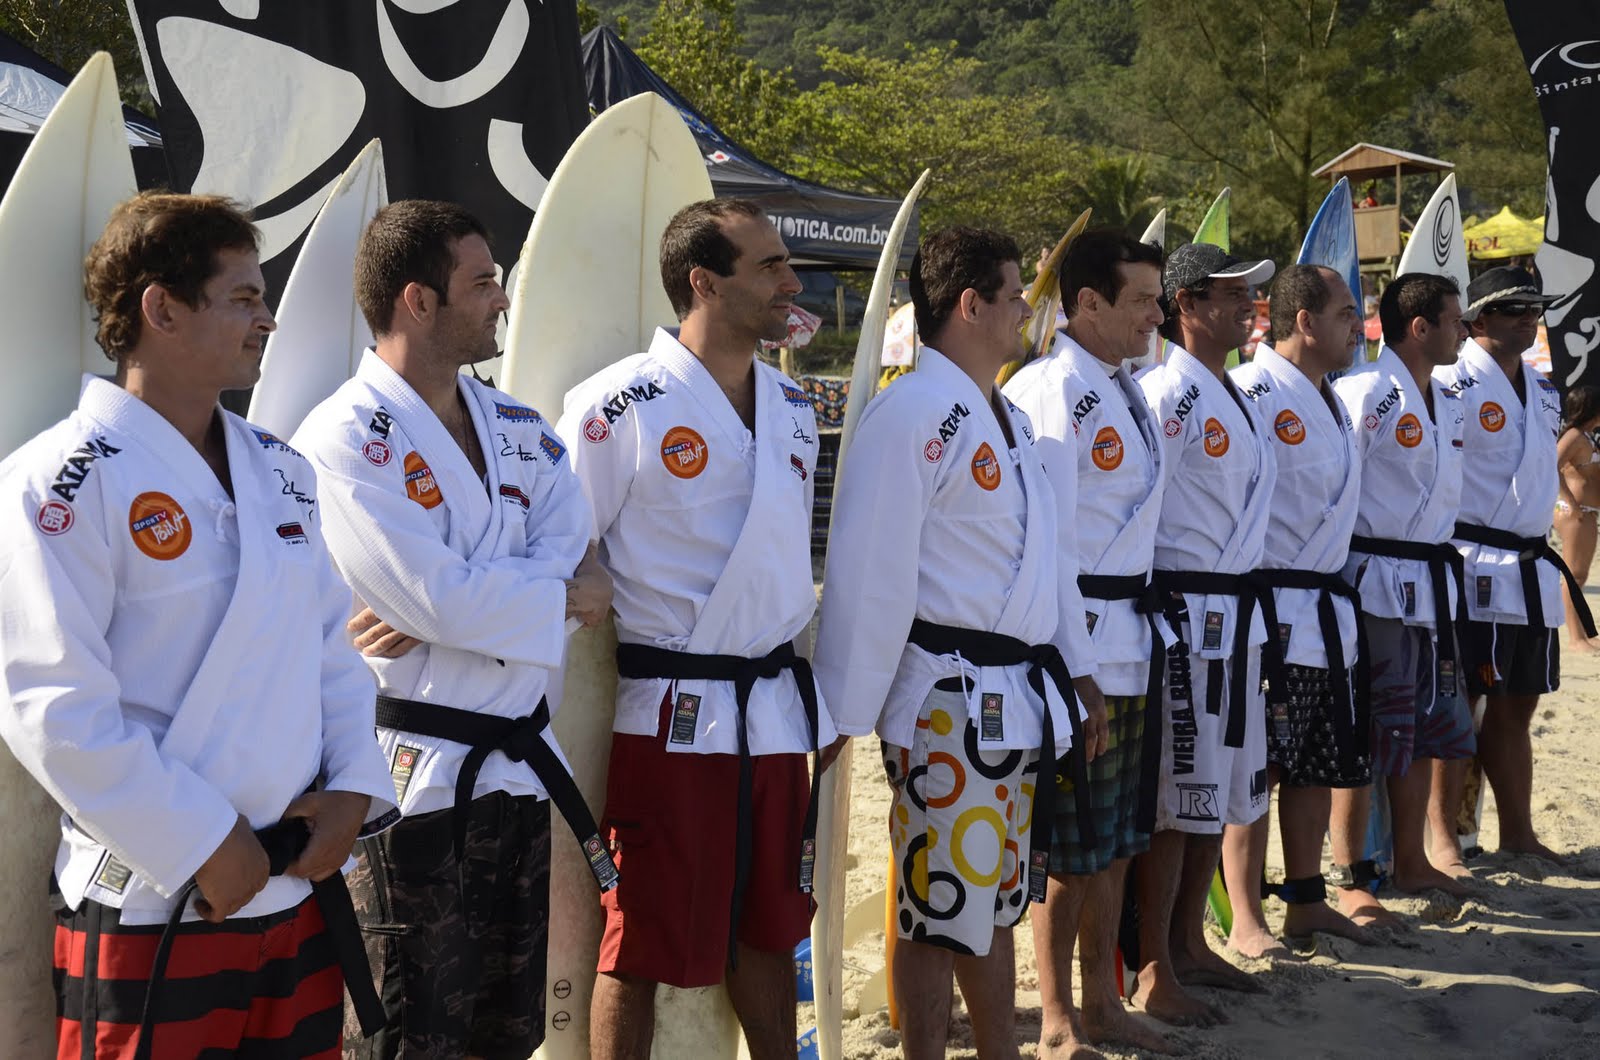 Watch: Epic Surf & Jiu-Jitsu Competition Organized Last Weekend